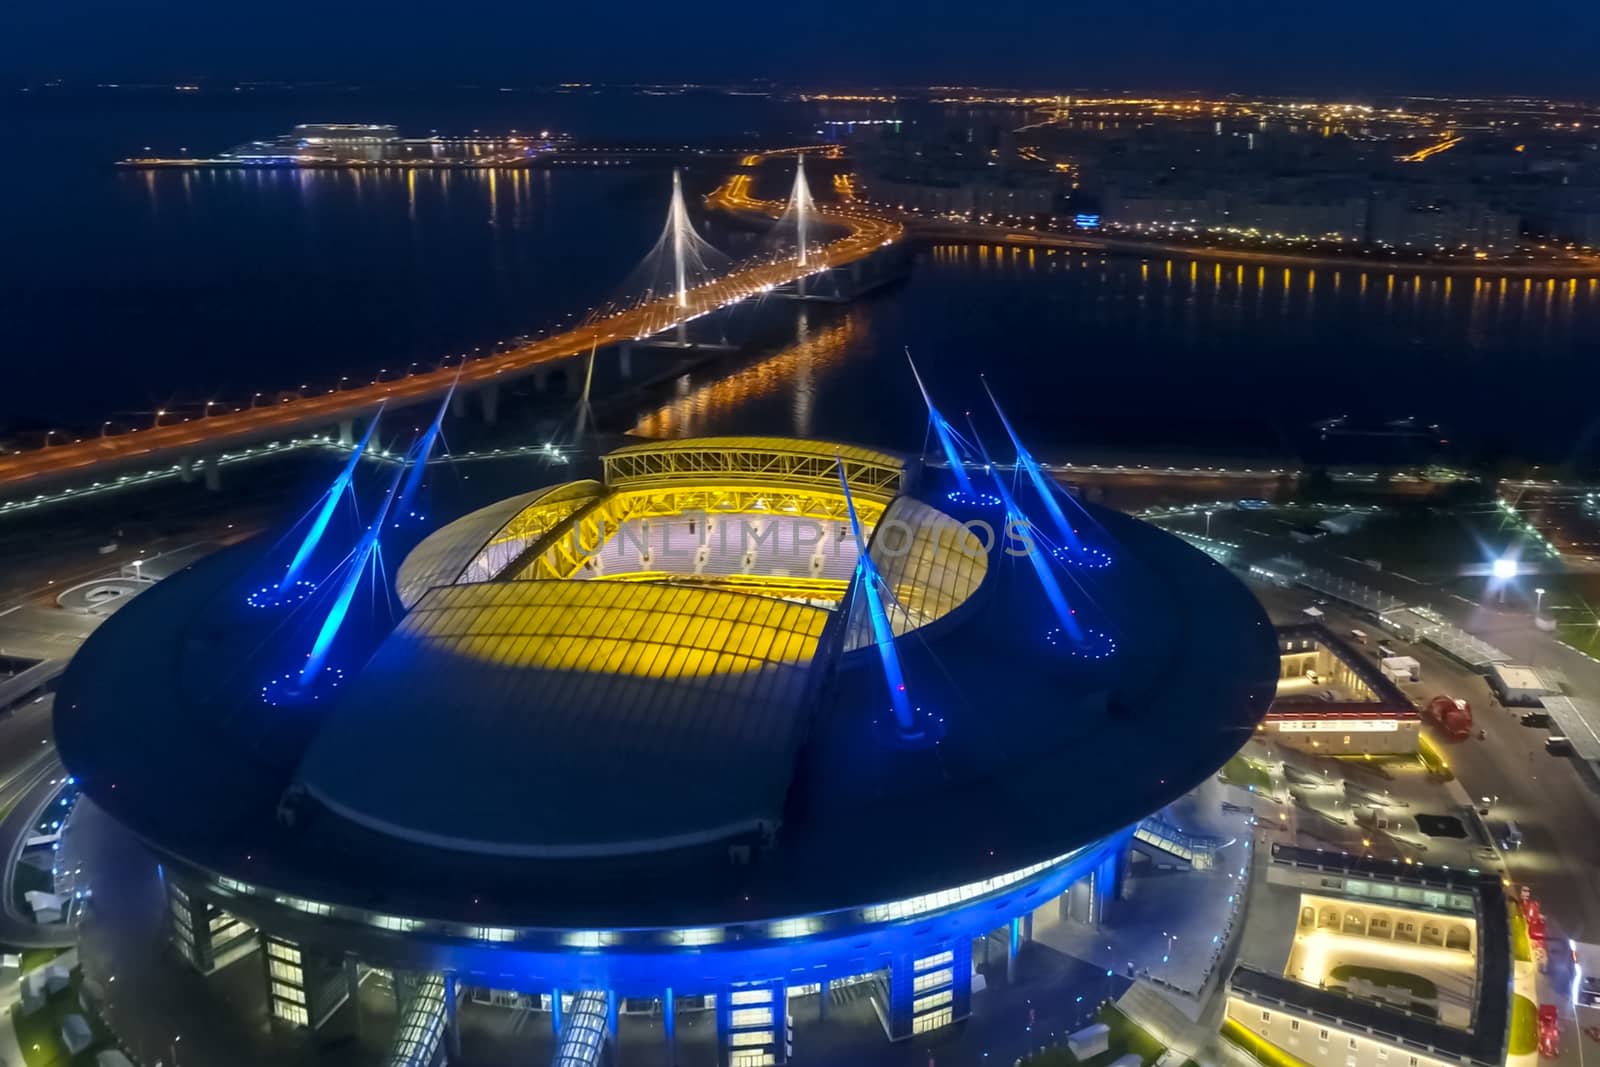 Stadium Zenith Arena at night. Illuminated by multi-colored lights the stadium at night. by nyrok